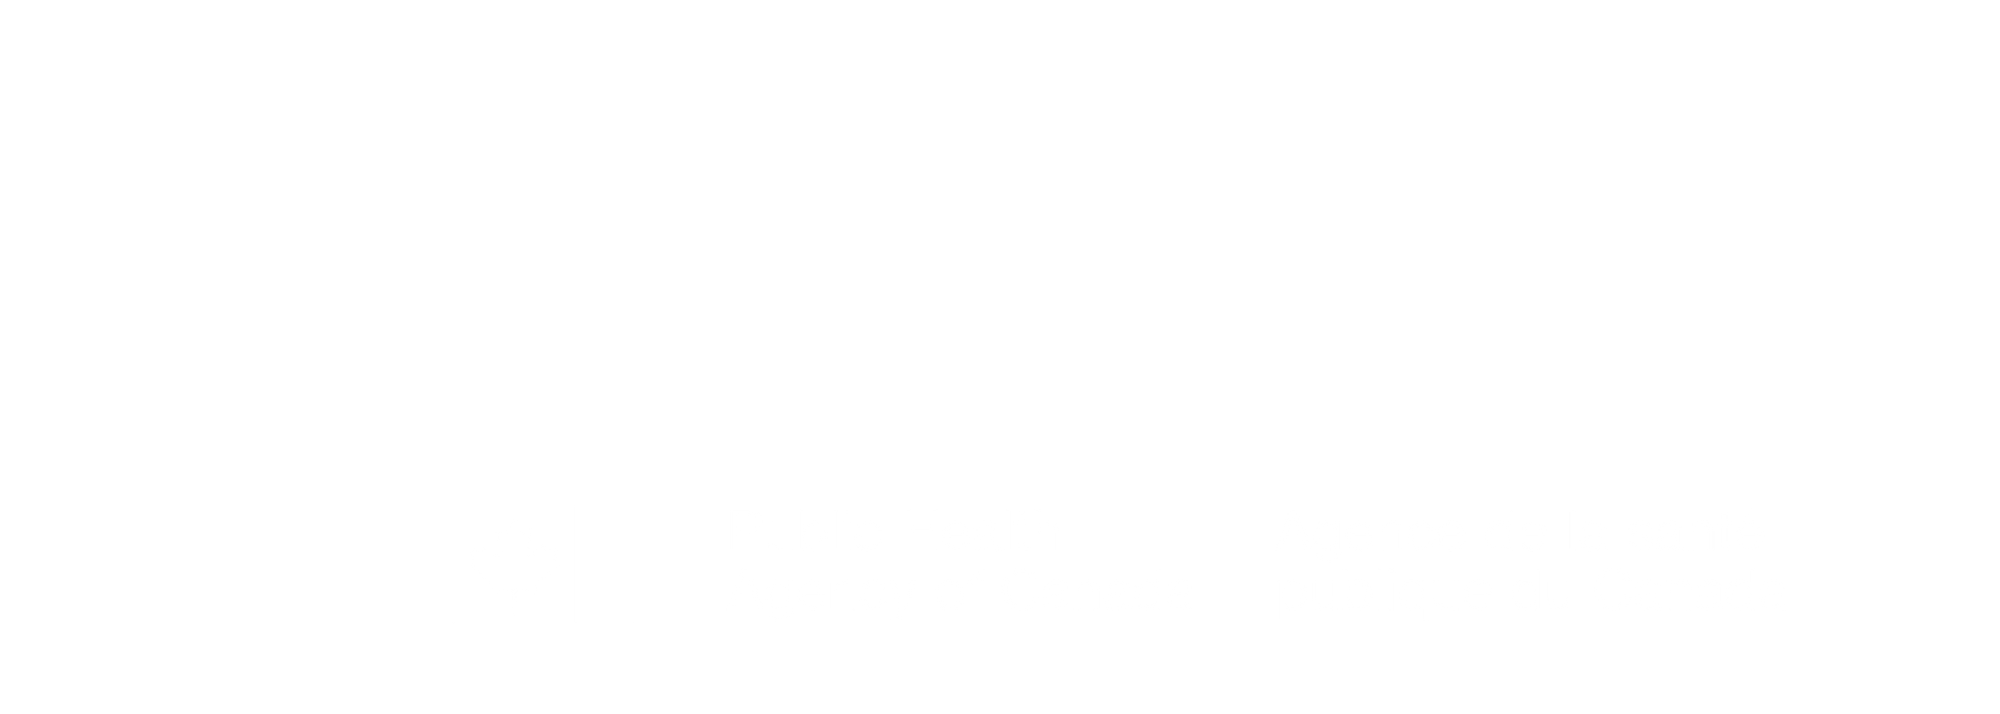 CNISP logo